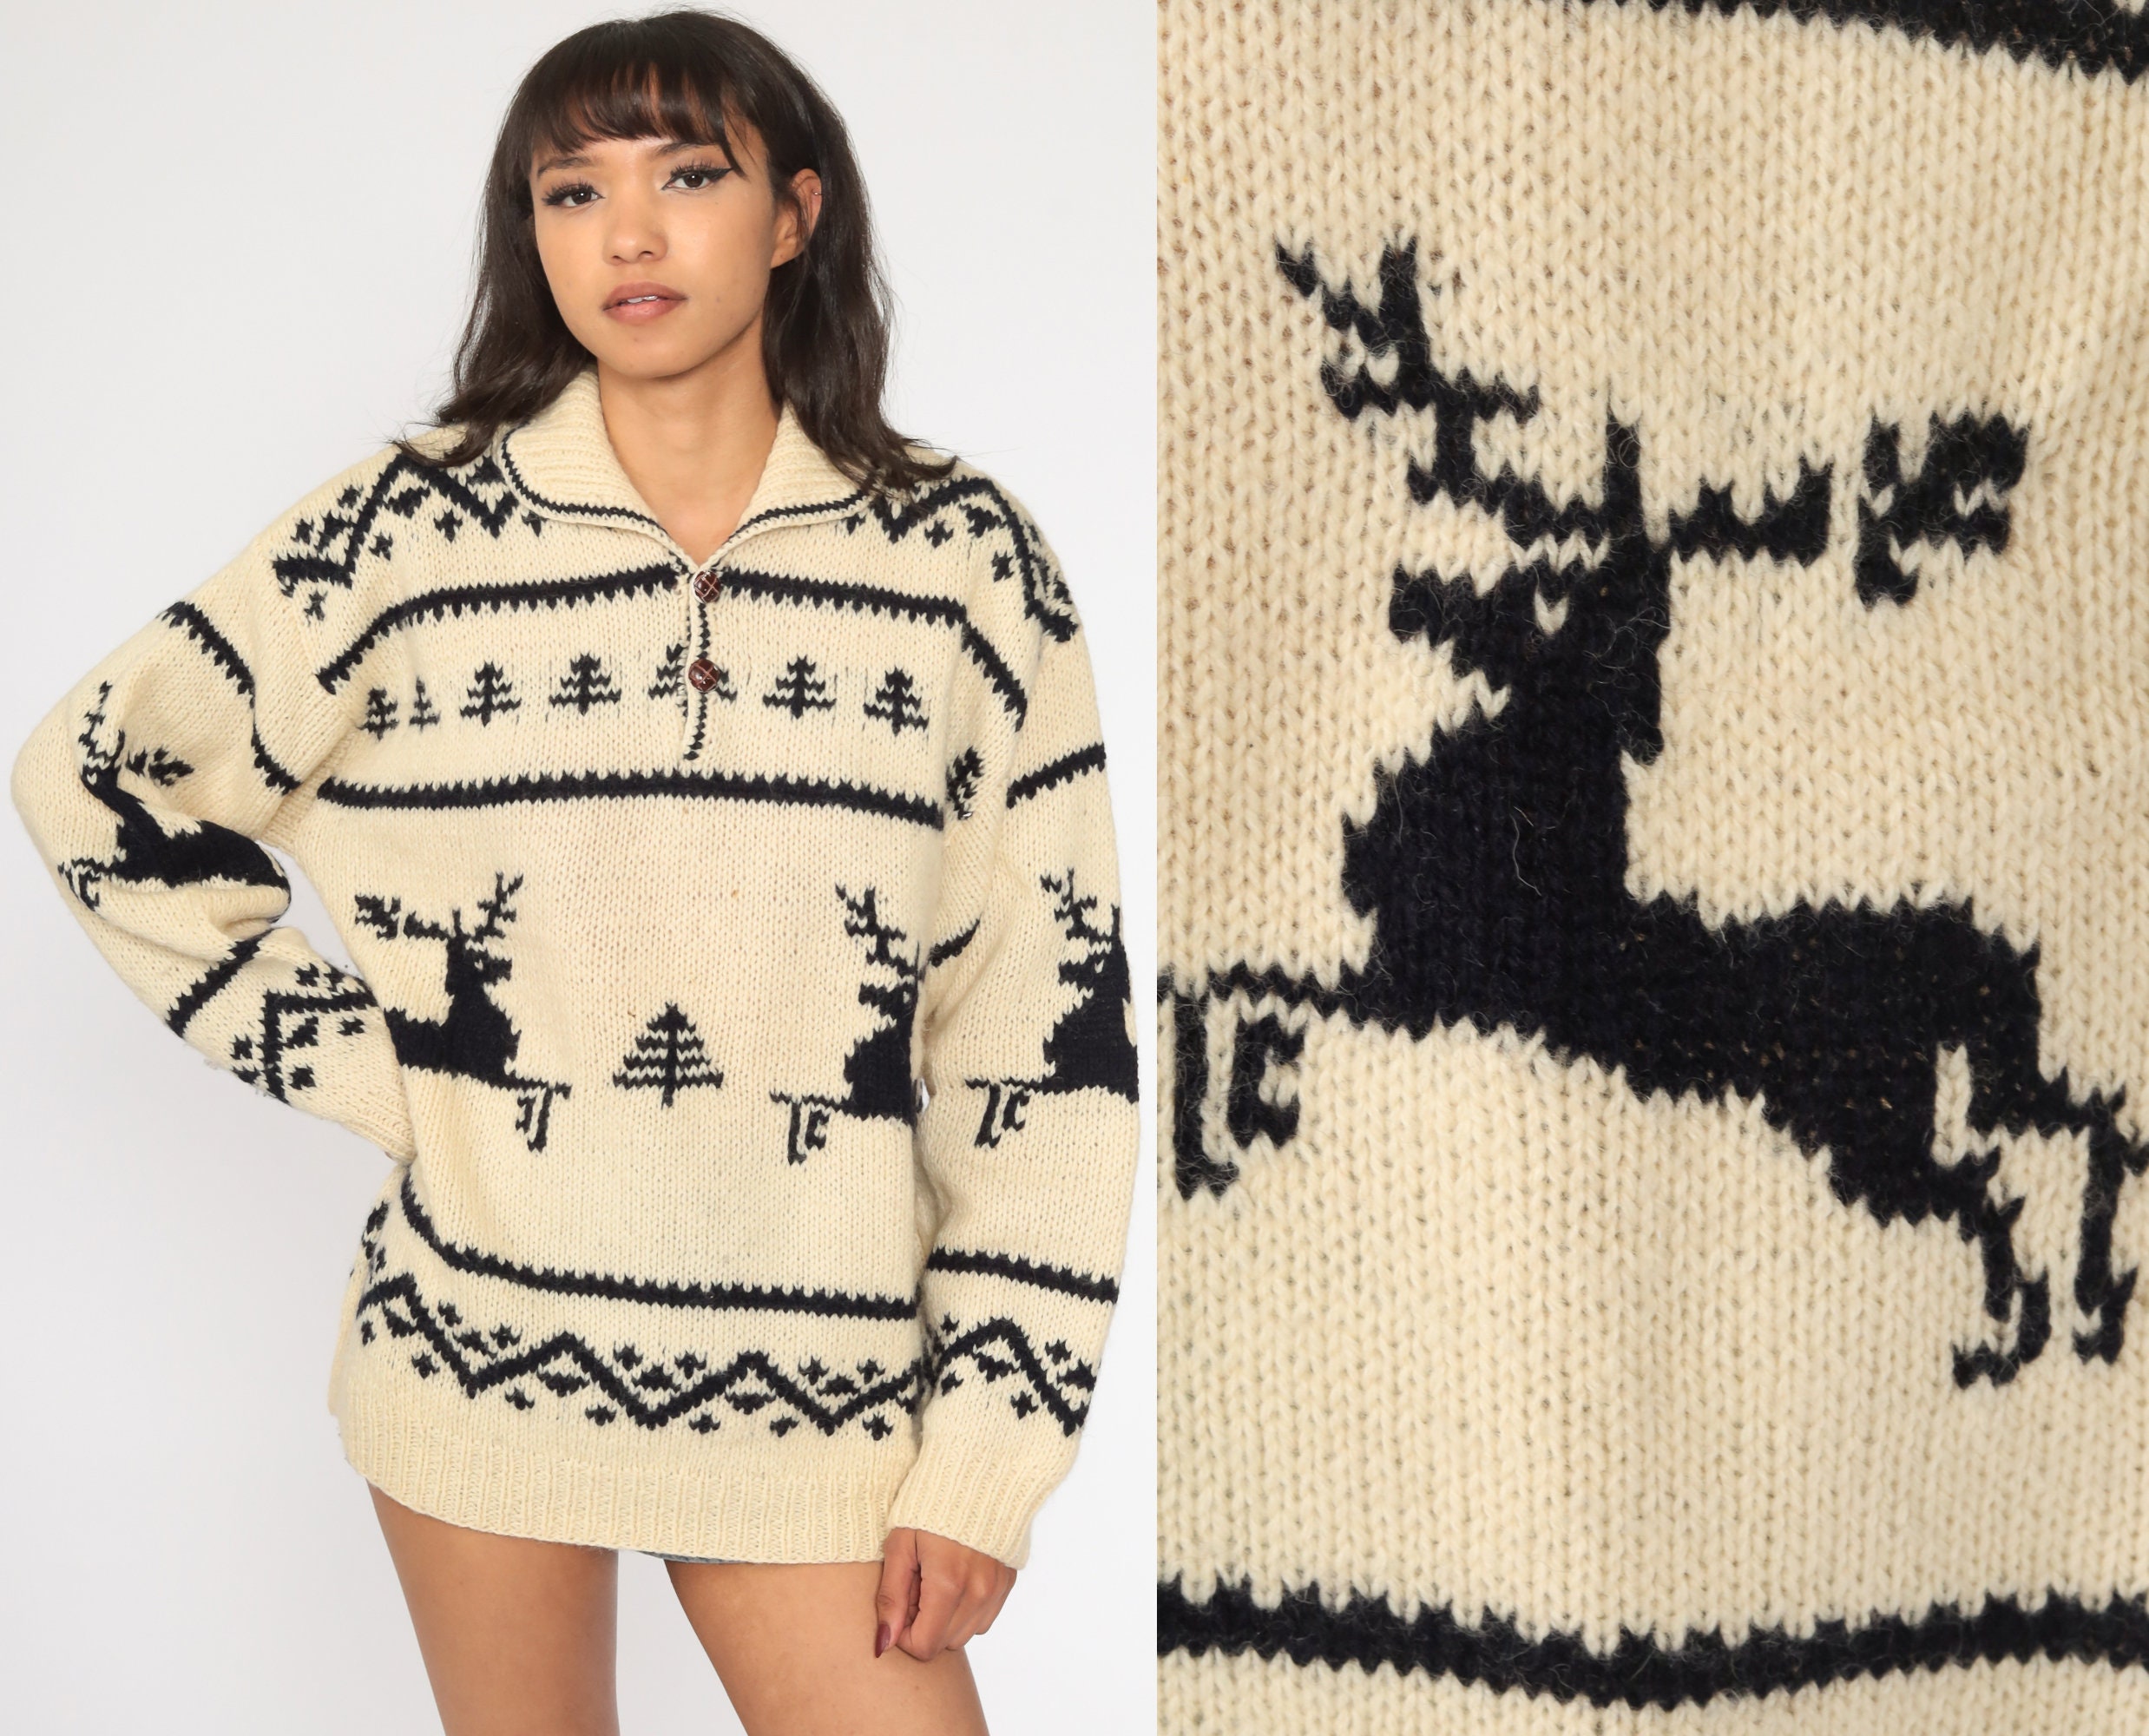 Reindeer Patterned Jumper Vintage Reindeer Sweater Green Patterned Knit Jumper Reindeer Patterned Sweater Christmas Jumper Vintage Sweater M